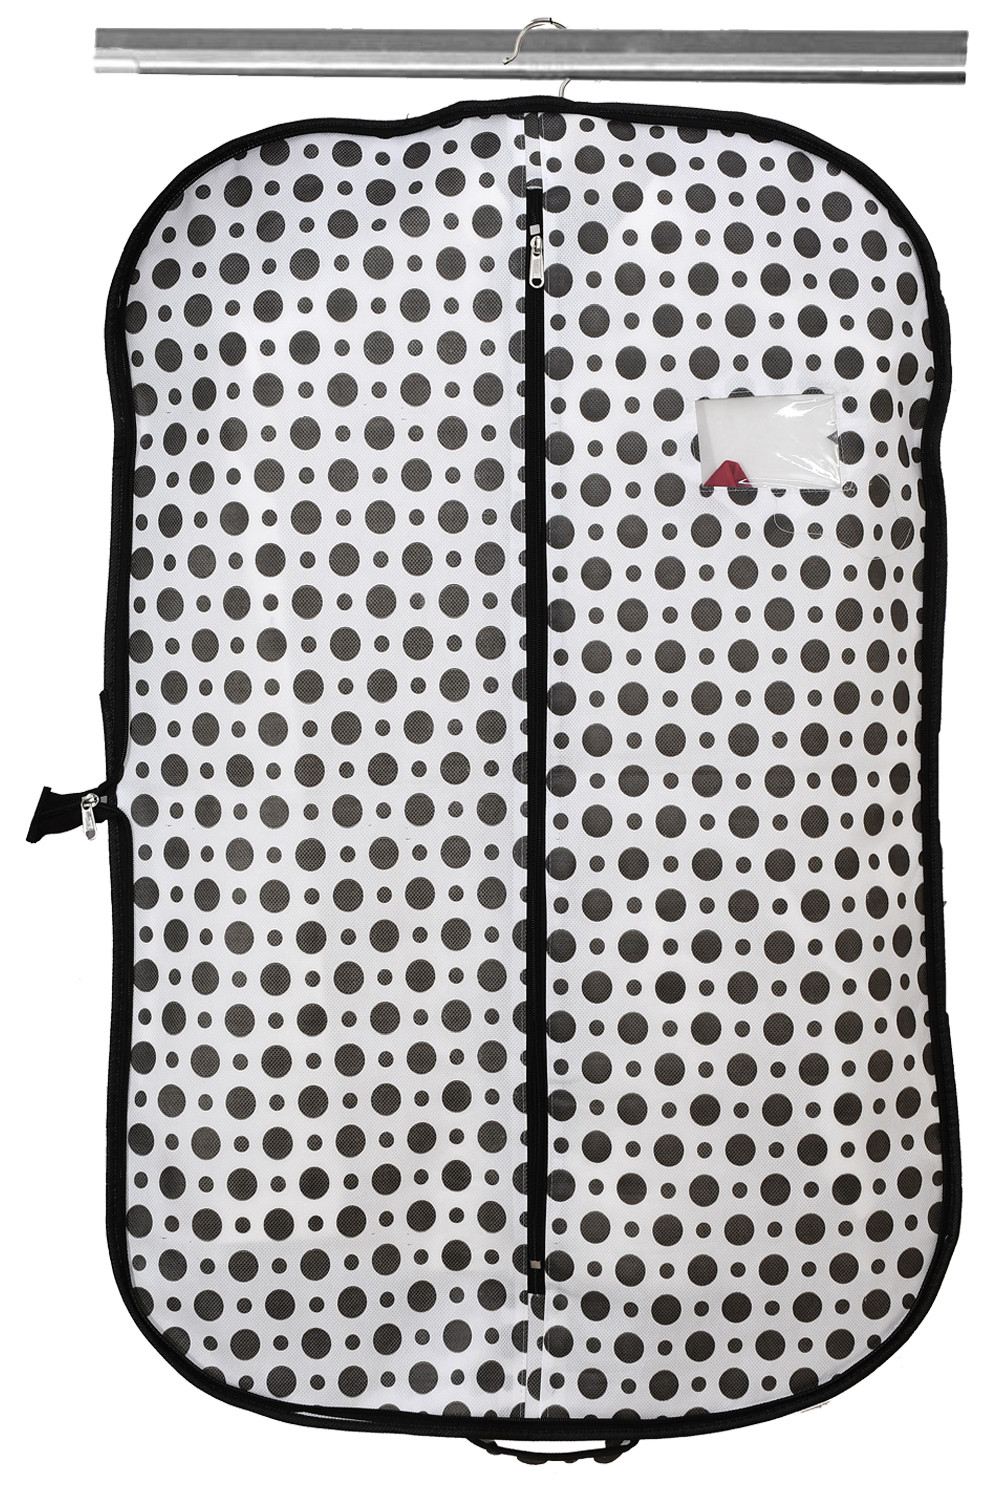 Kuber Industries Polka Dots Printed Foldable Non Woven Men's Coat Blazer Cover (Black & White)-KUBMART898